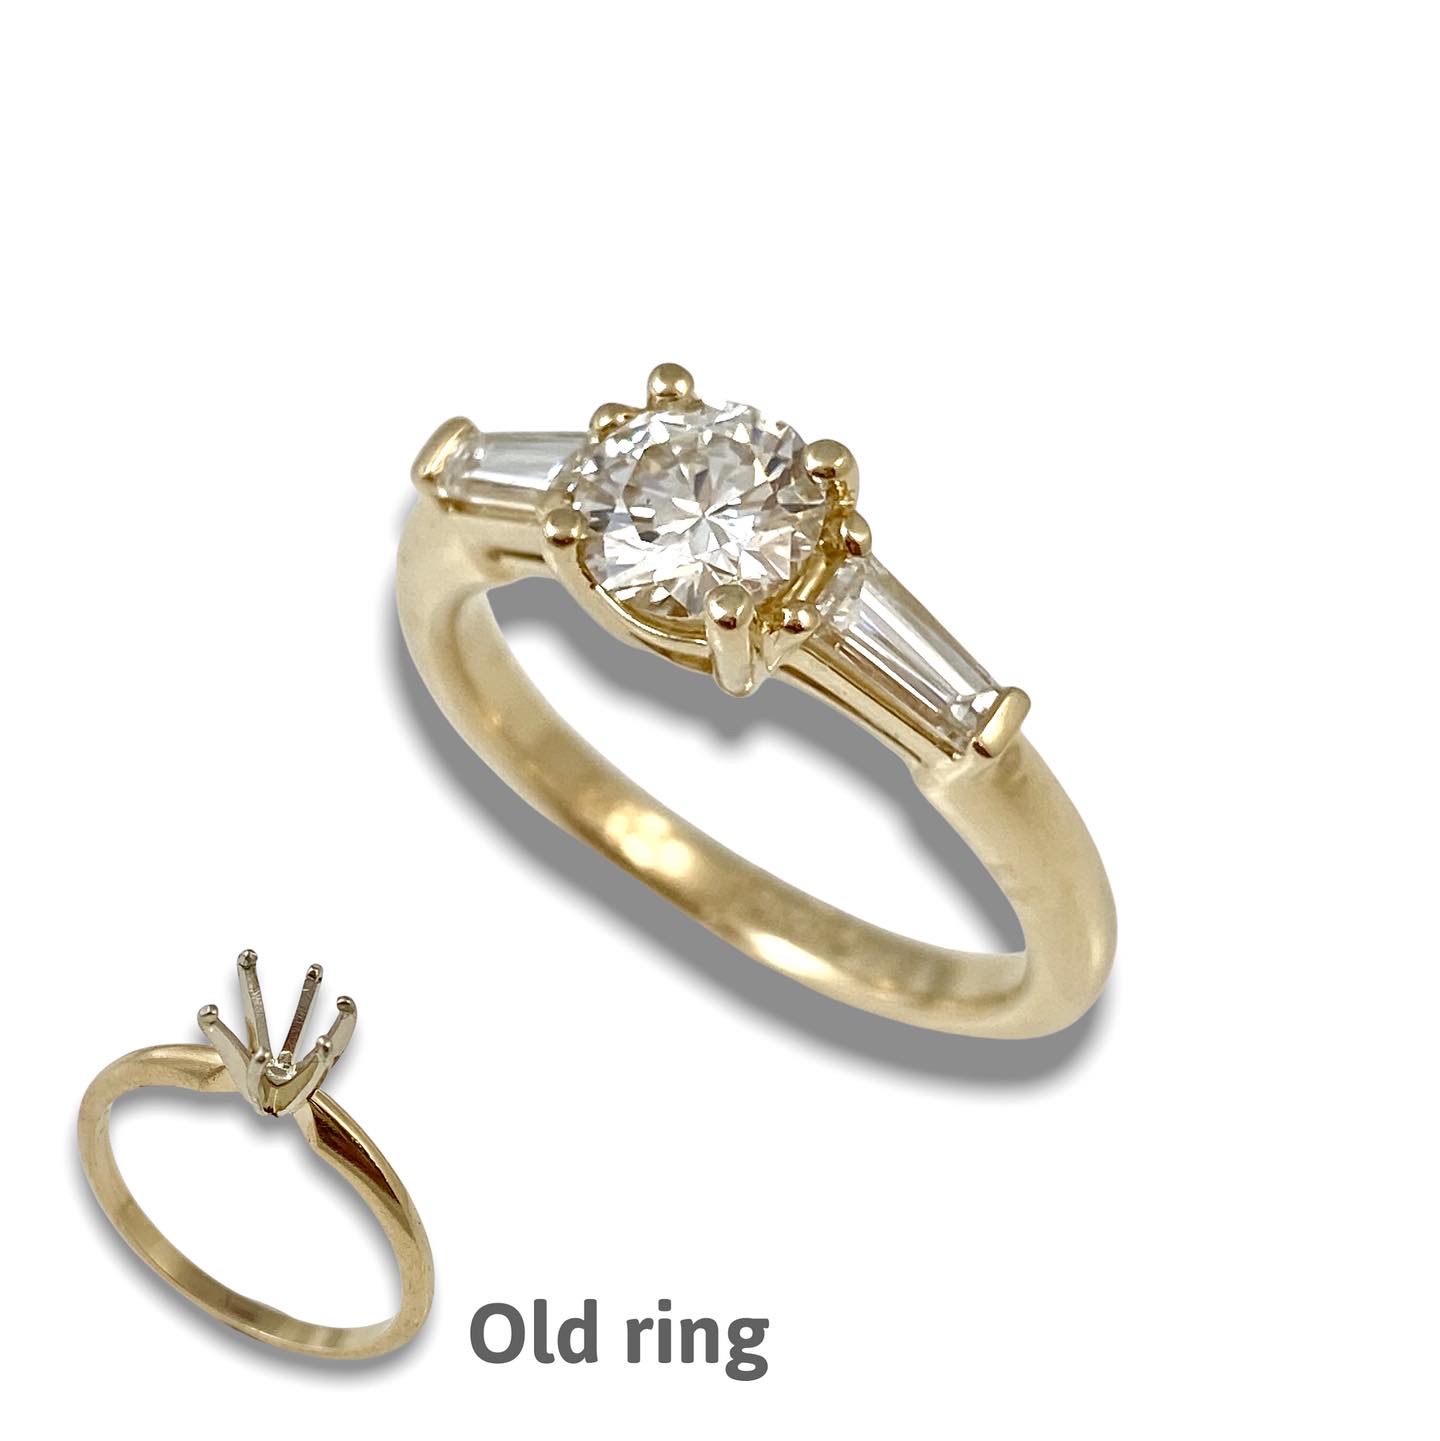 Next generation new ring design using family diamond